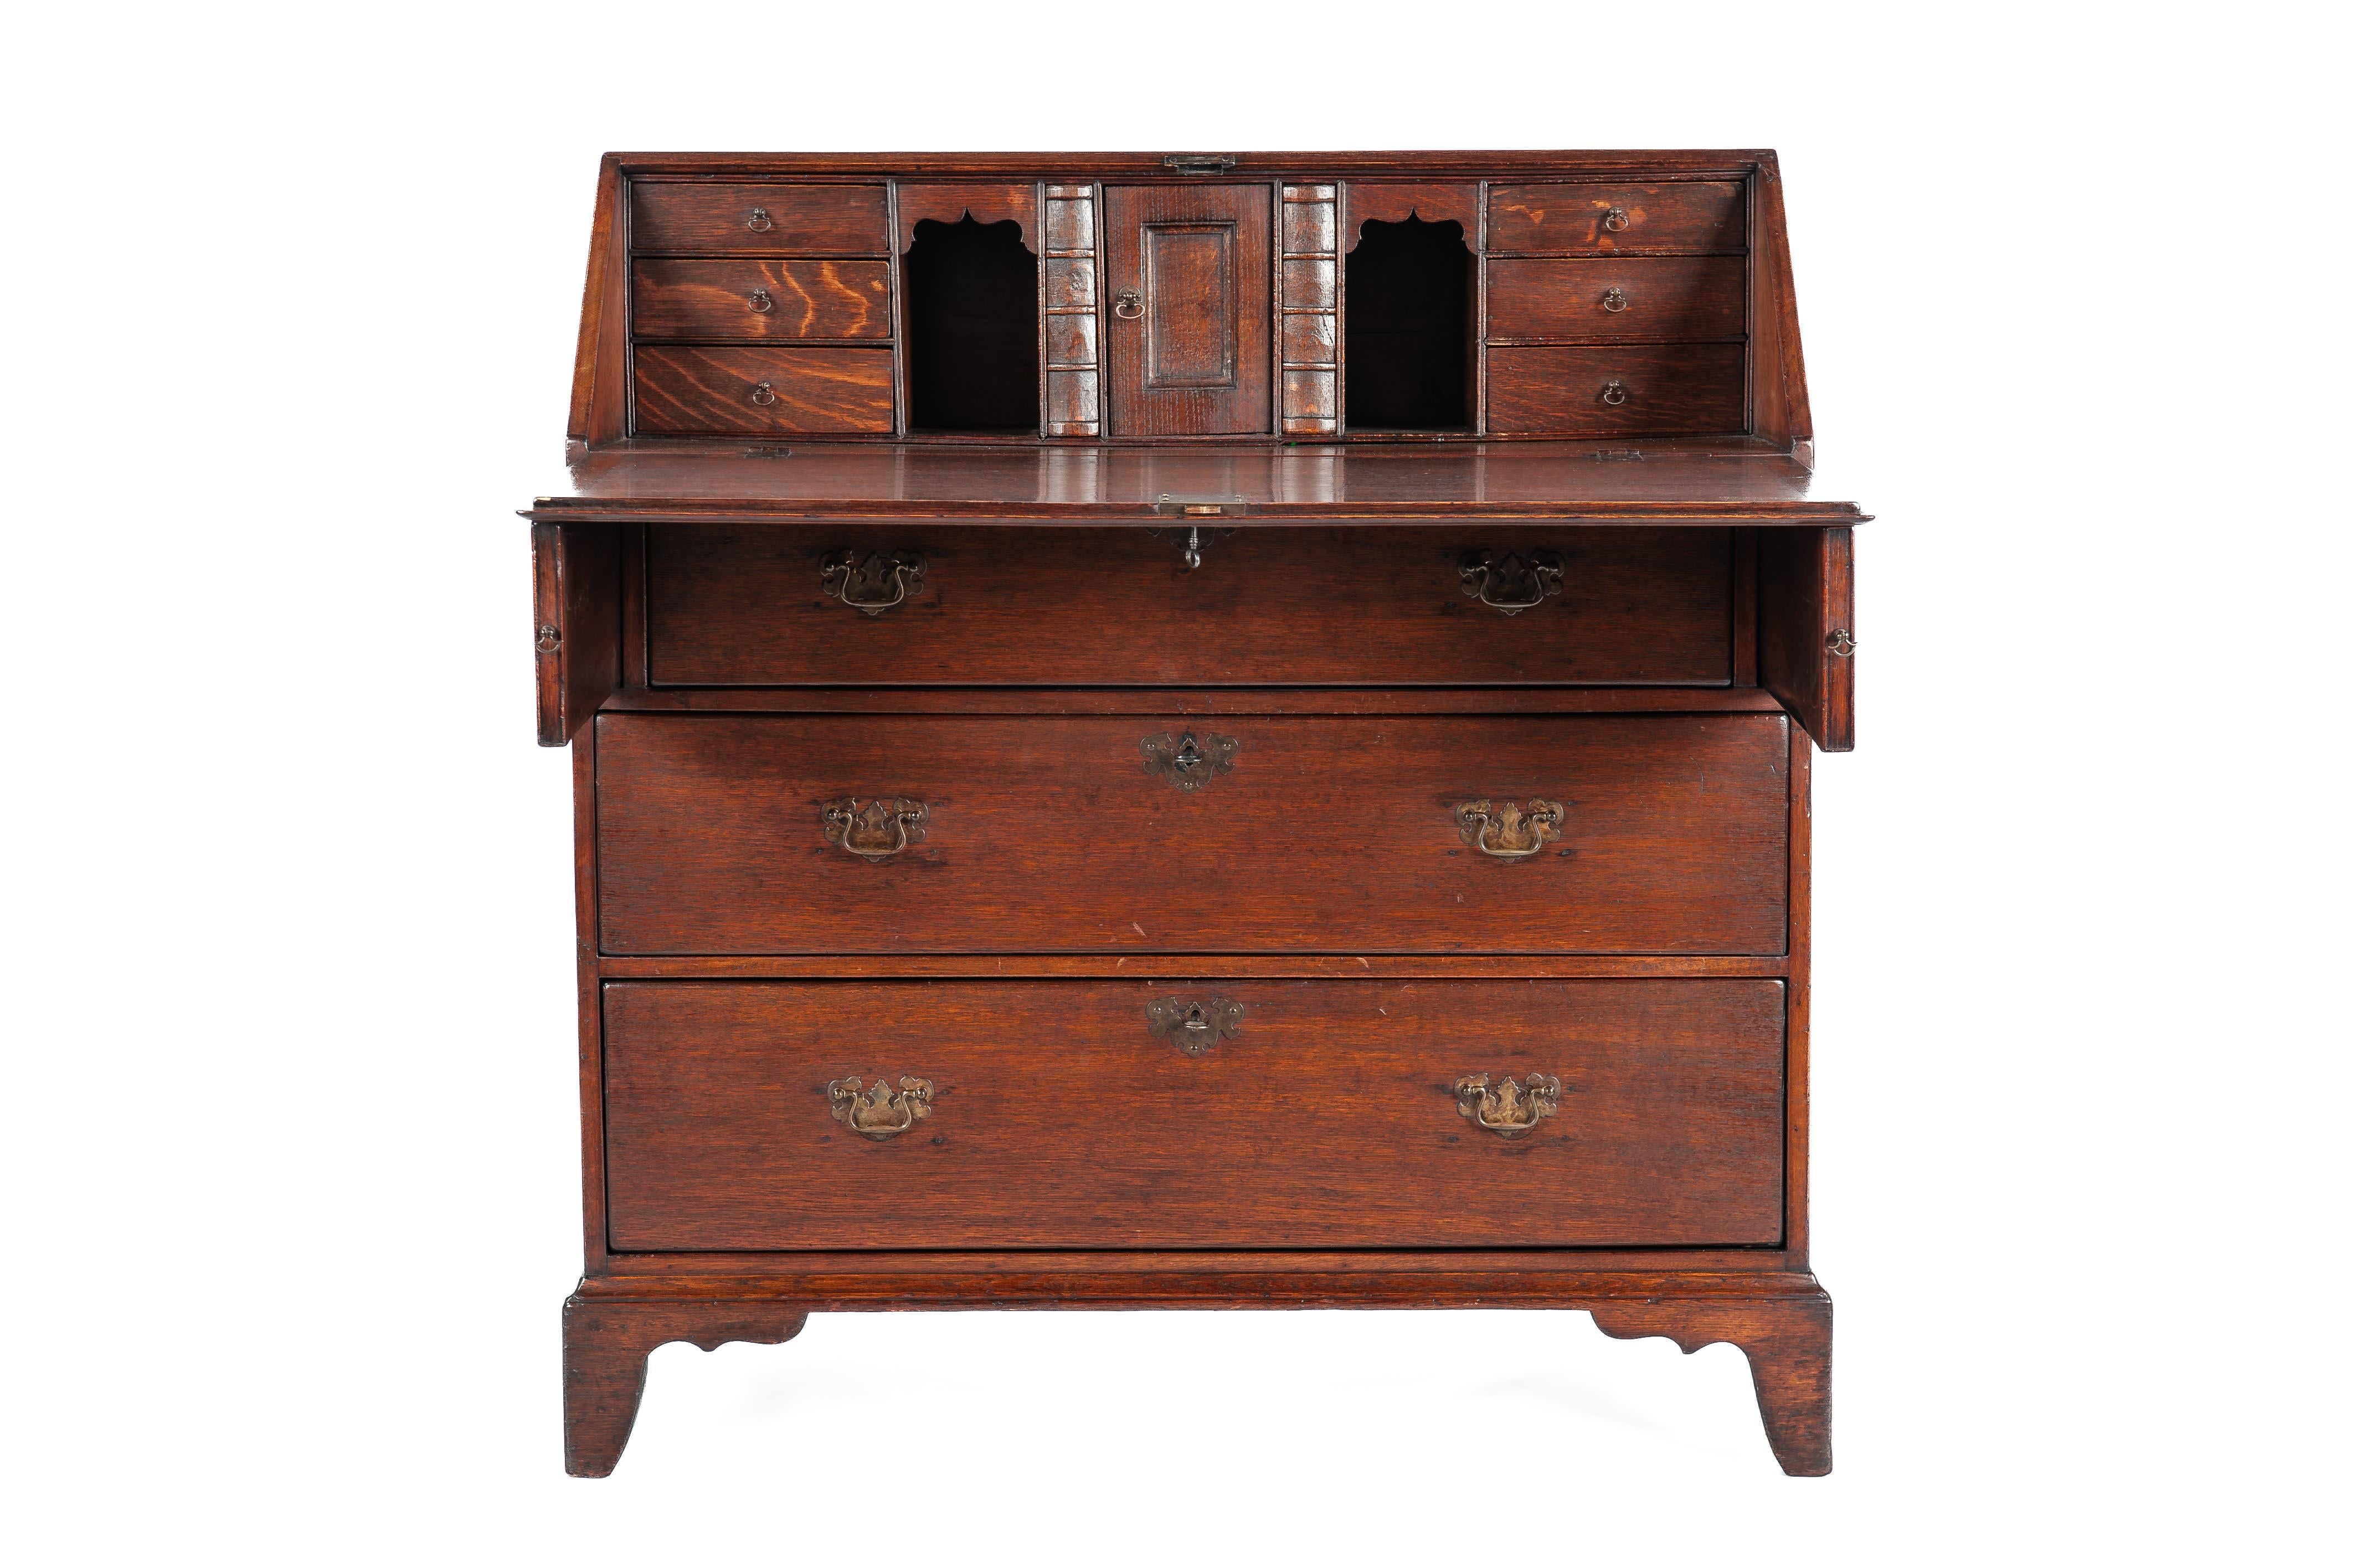 Polished Antique 19th century English George III warm oak Slant front secretary desk